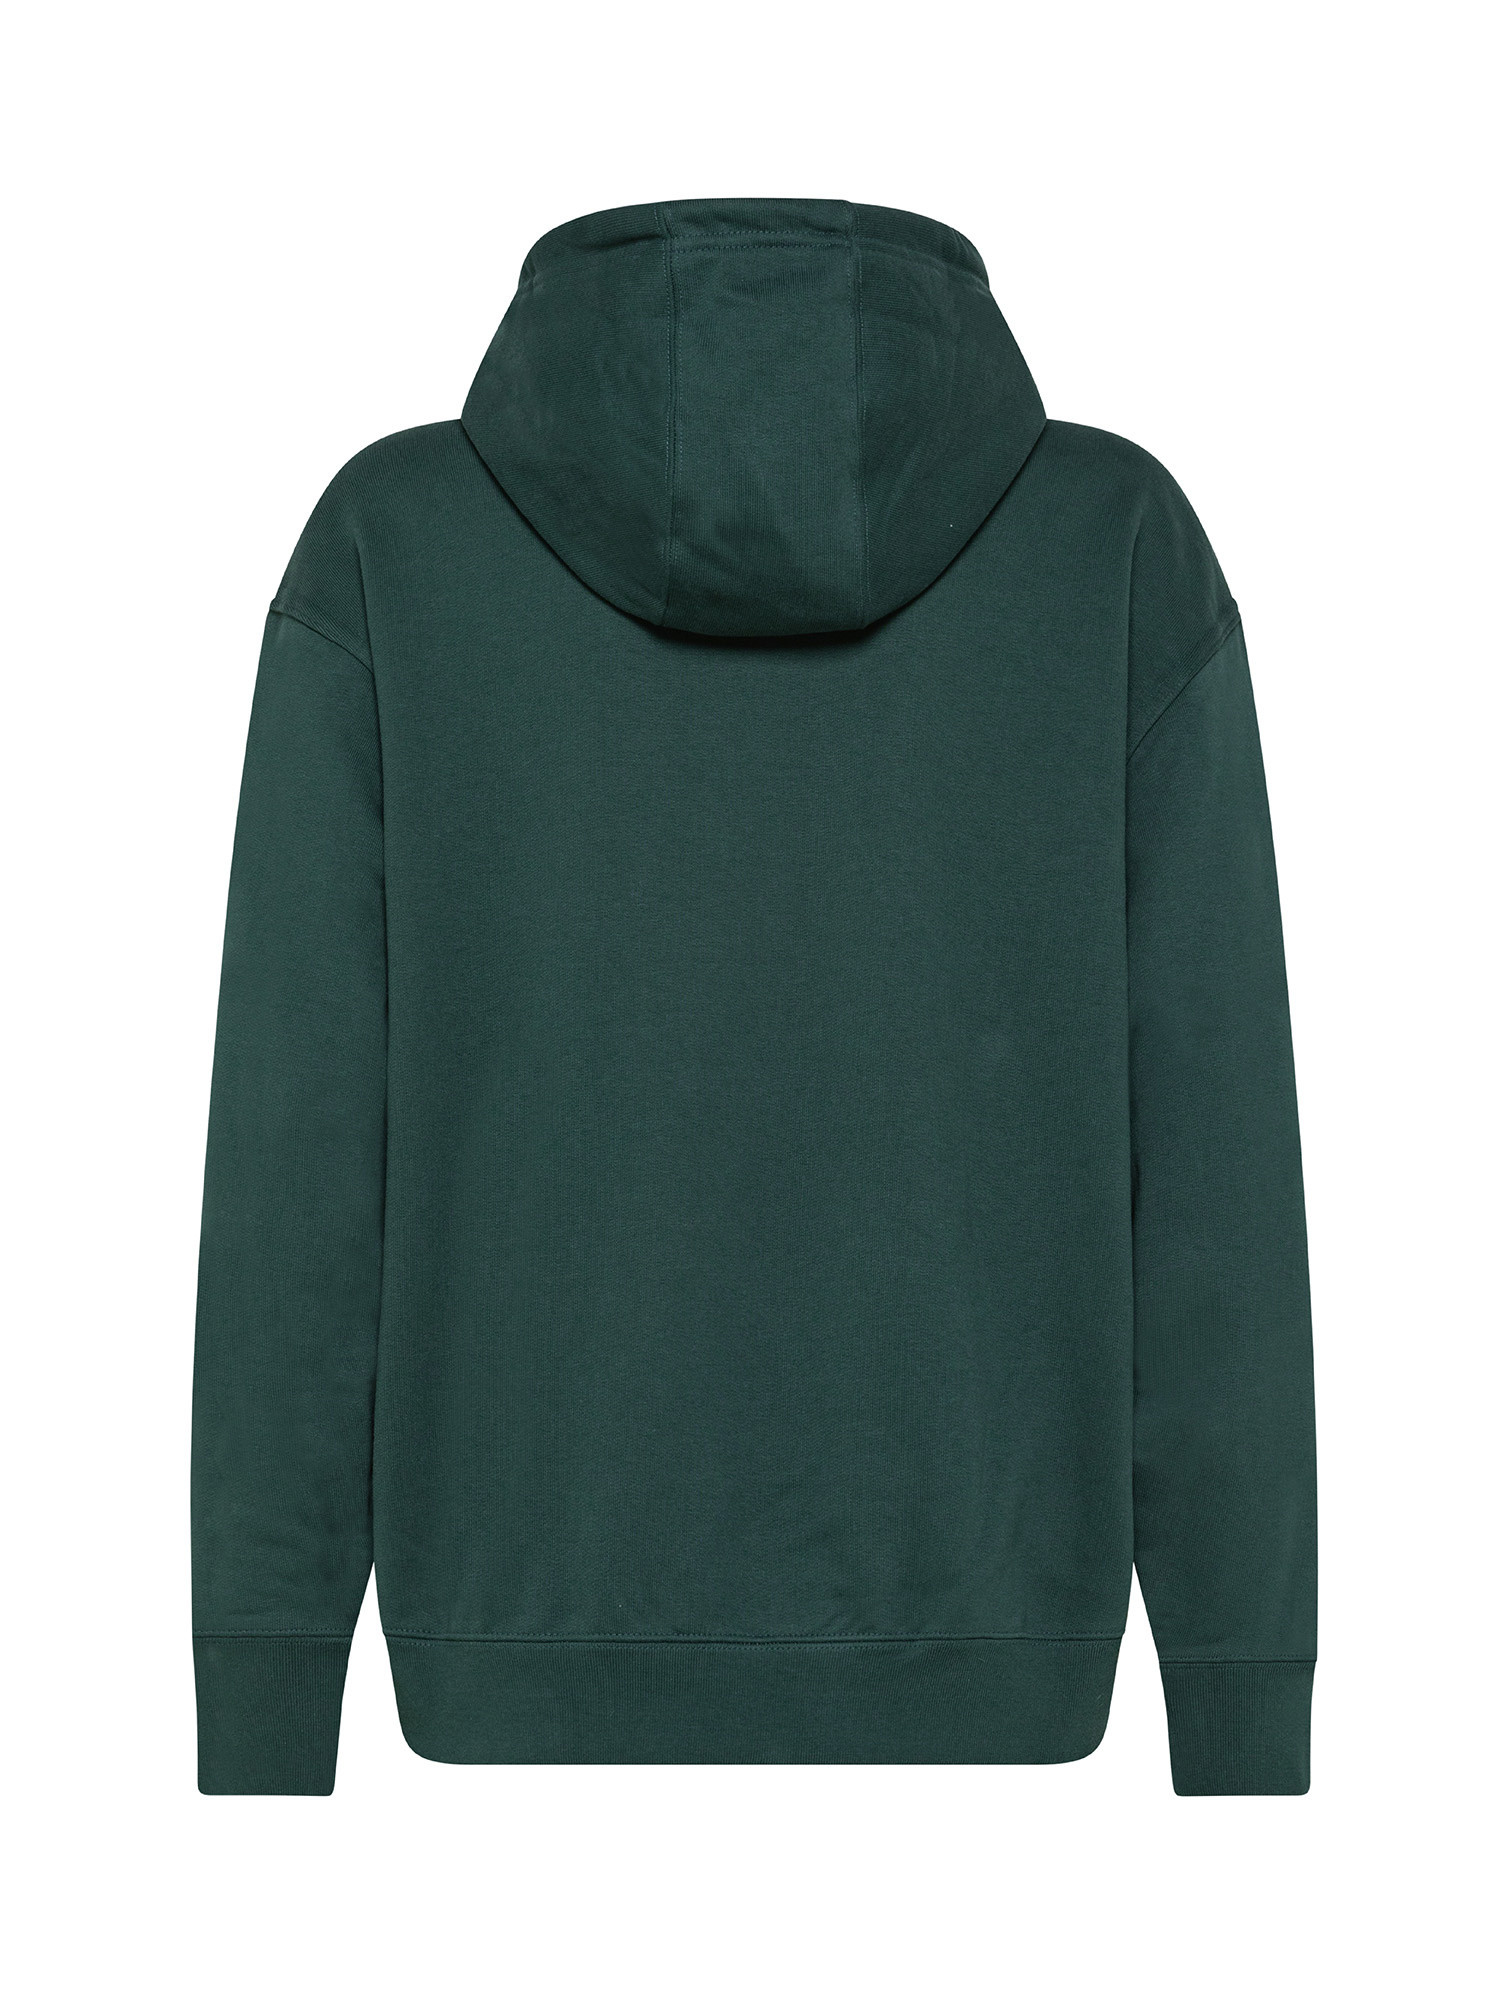 Adidas - Oversized adicolor sweatshirt, Dark Green, large image number 1